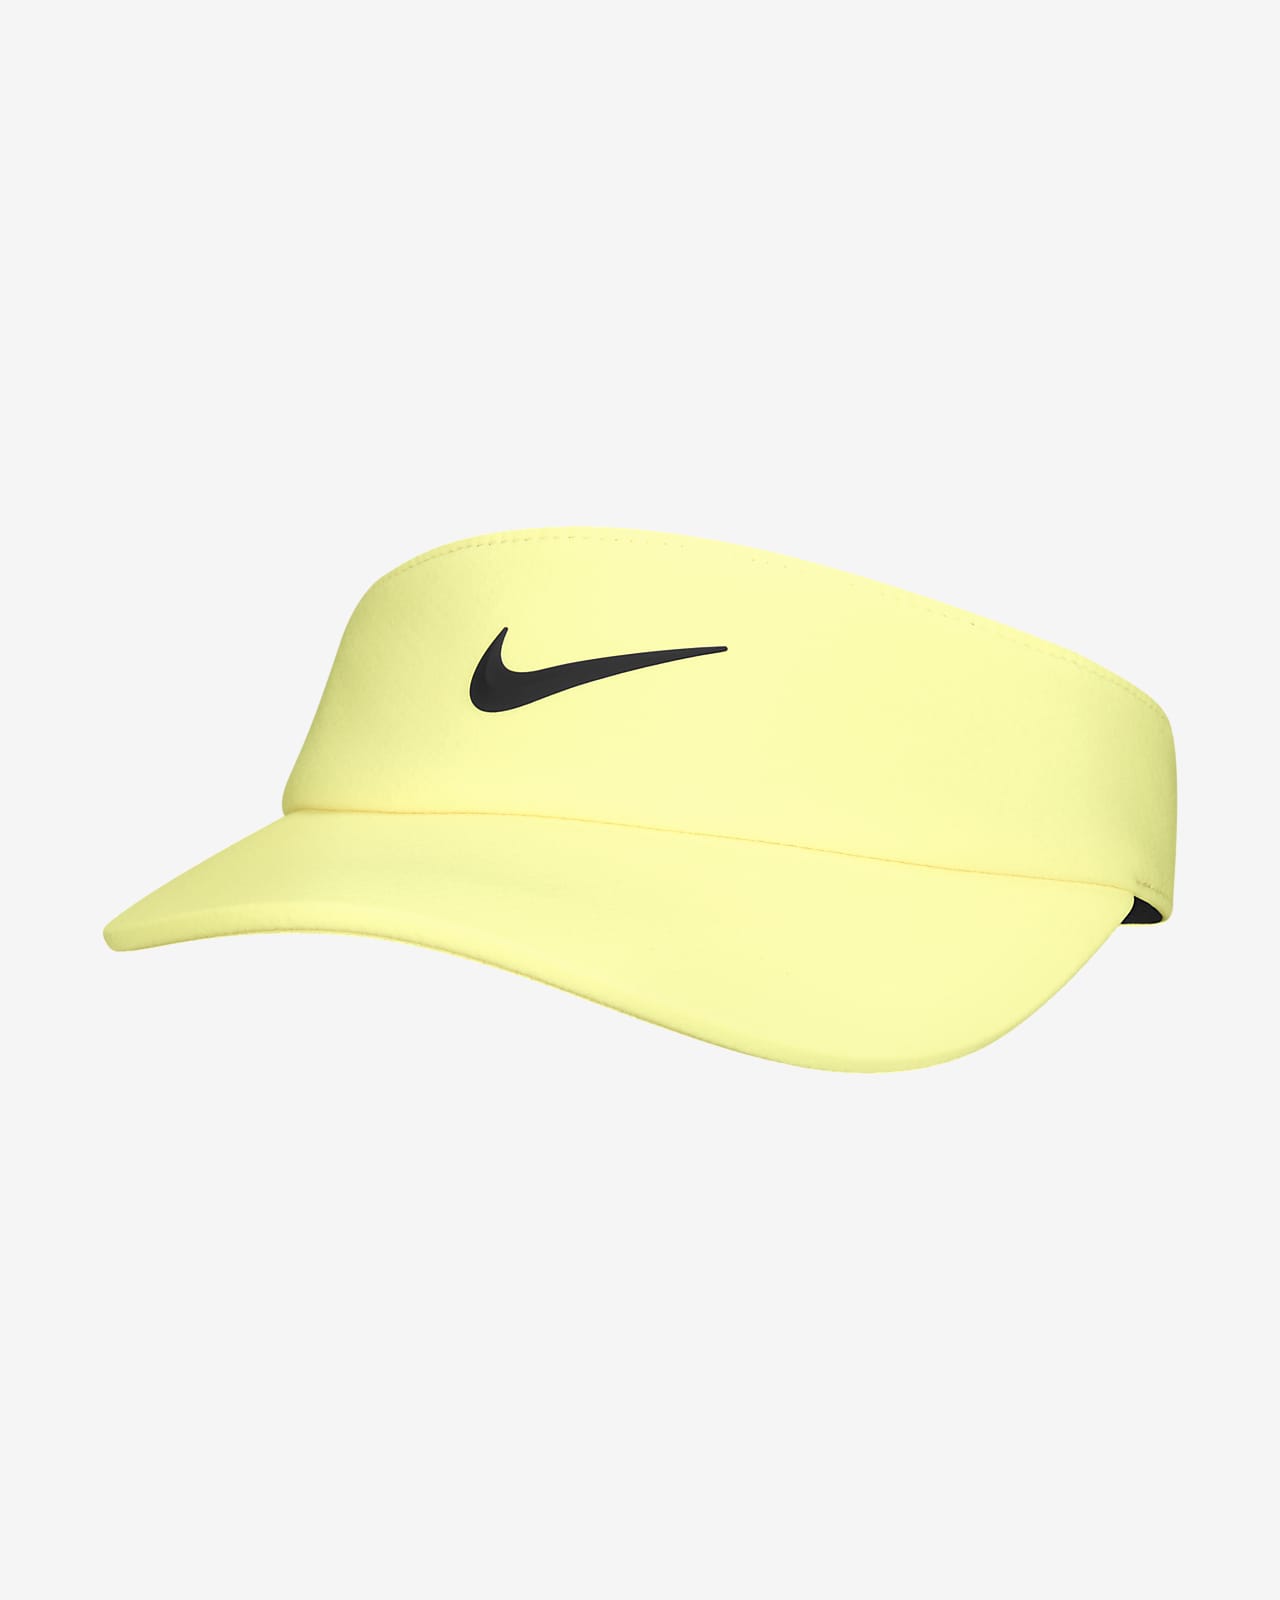 Nike Dri-FIT AeroBill Women's Golf Visor